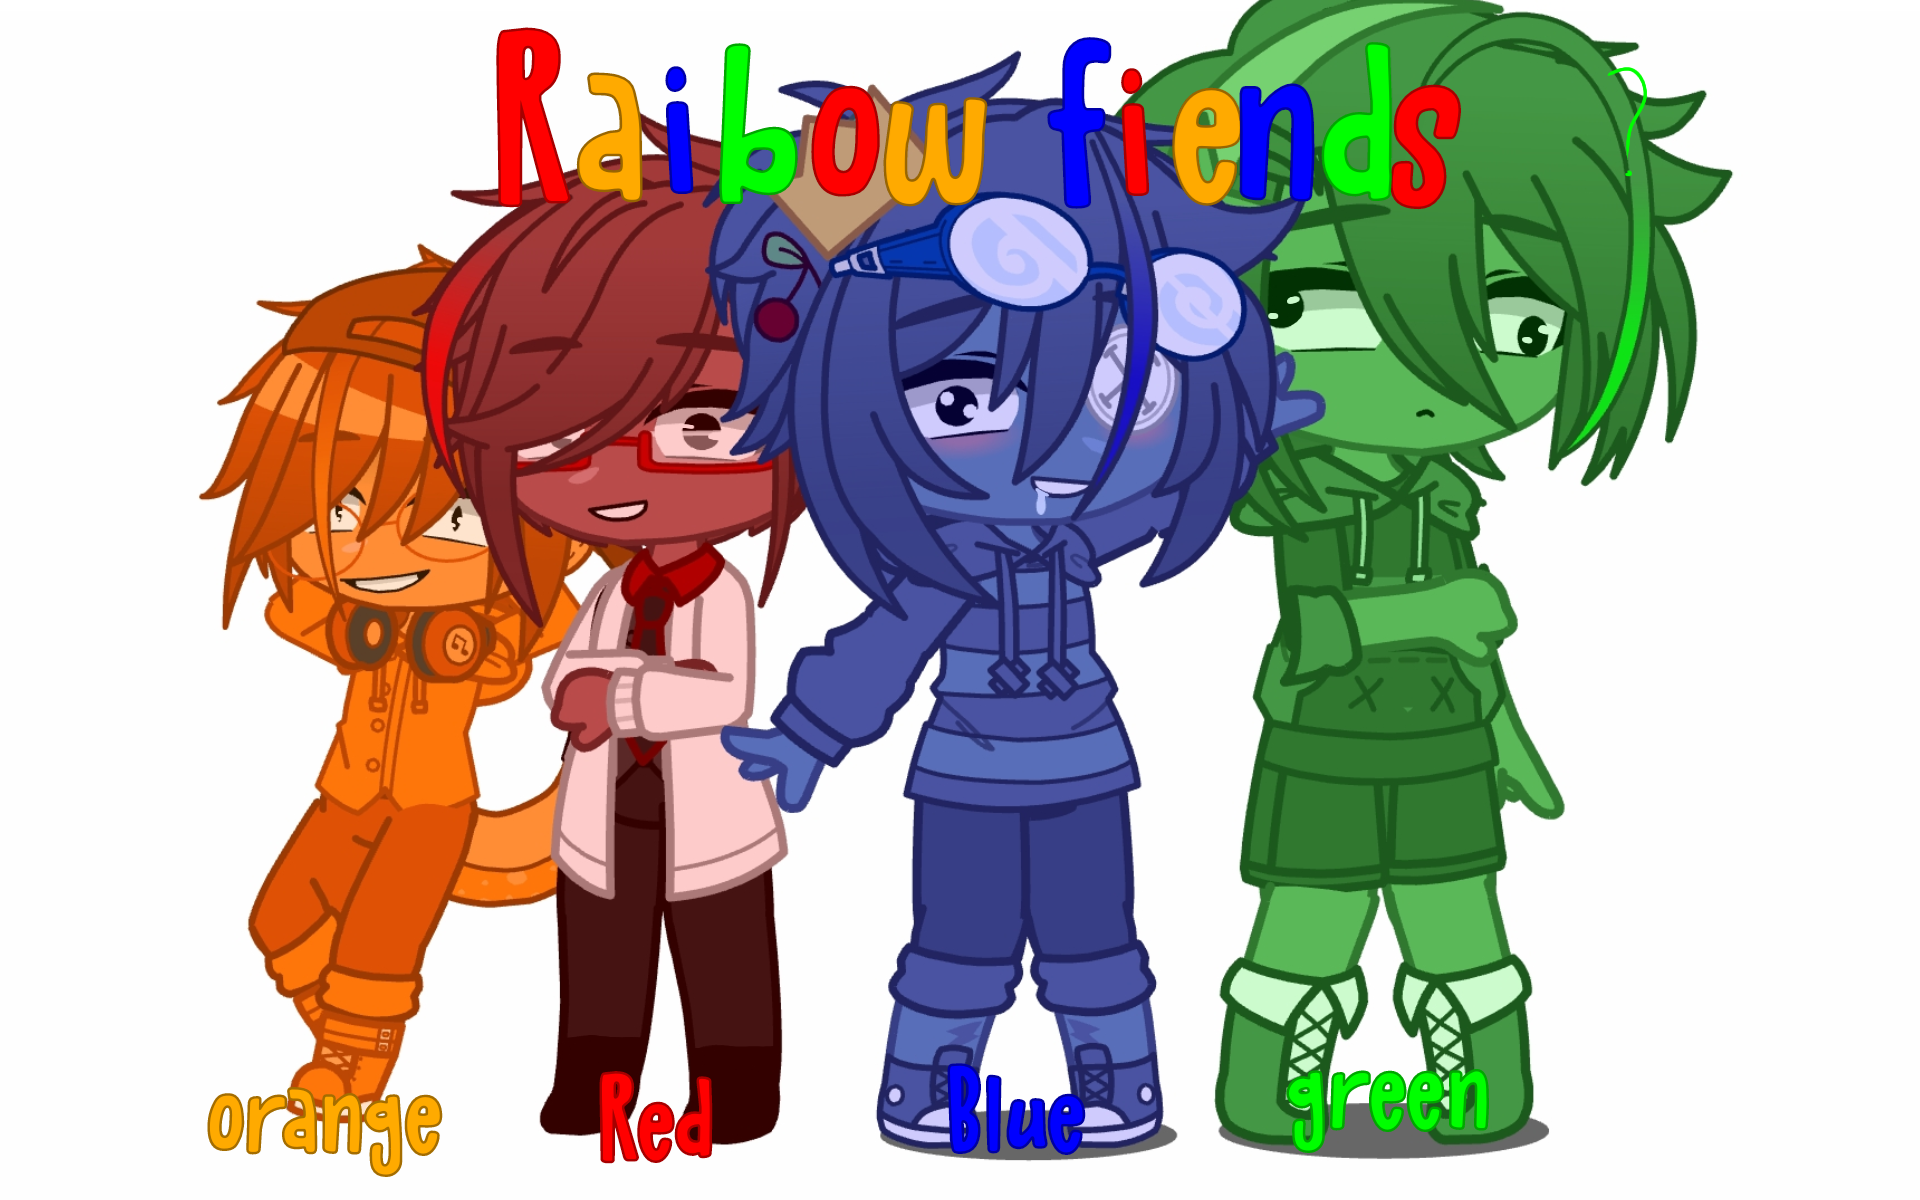 Rainbow friends in gacha by KumaDraws334 on DeviantArt